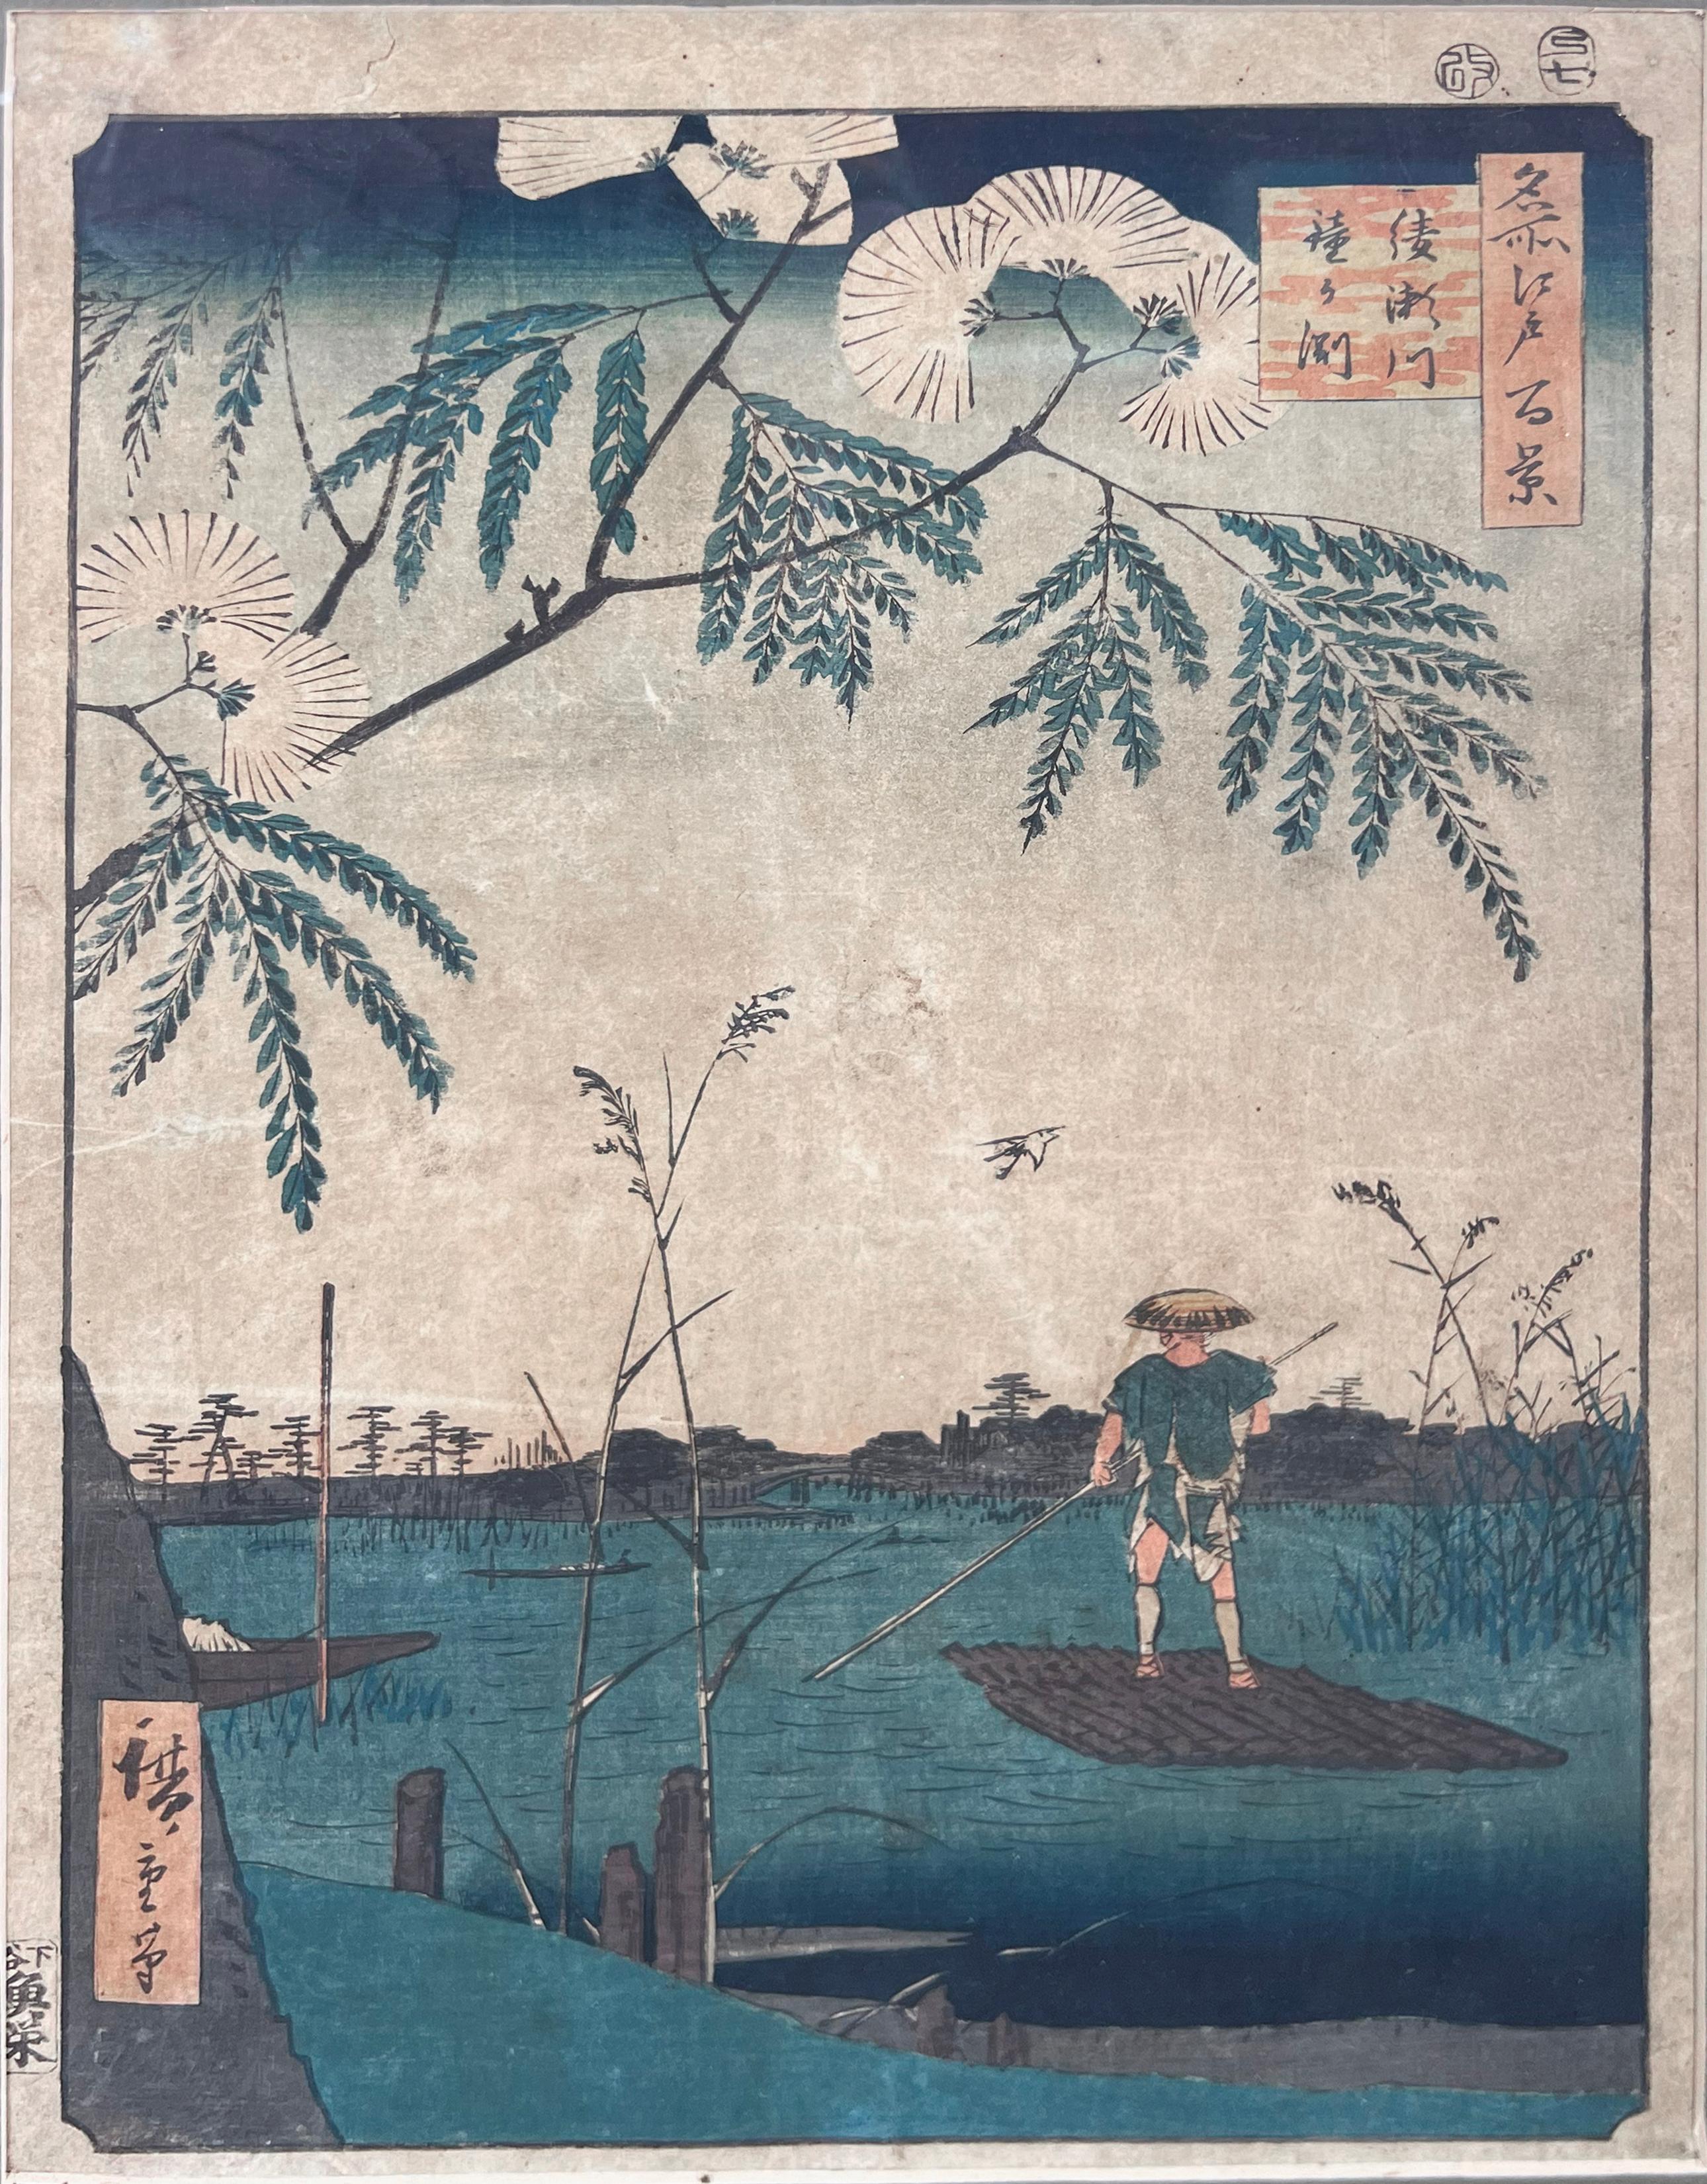 The Ayase River and Kanegafuchi, Summer, One Hundred Famous Views of Edo  - Realist Print by Utagawa Hiroshige (Ando Hiroshige)